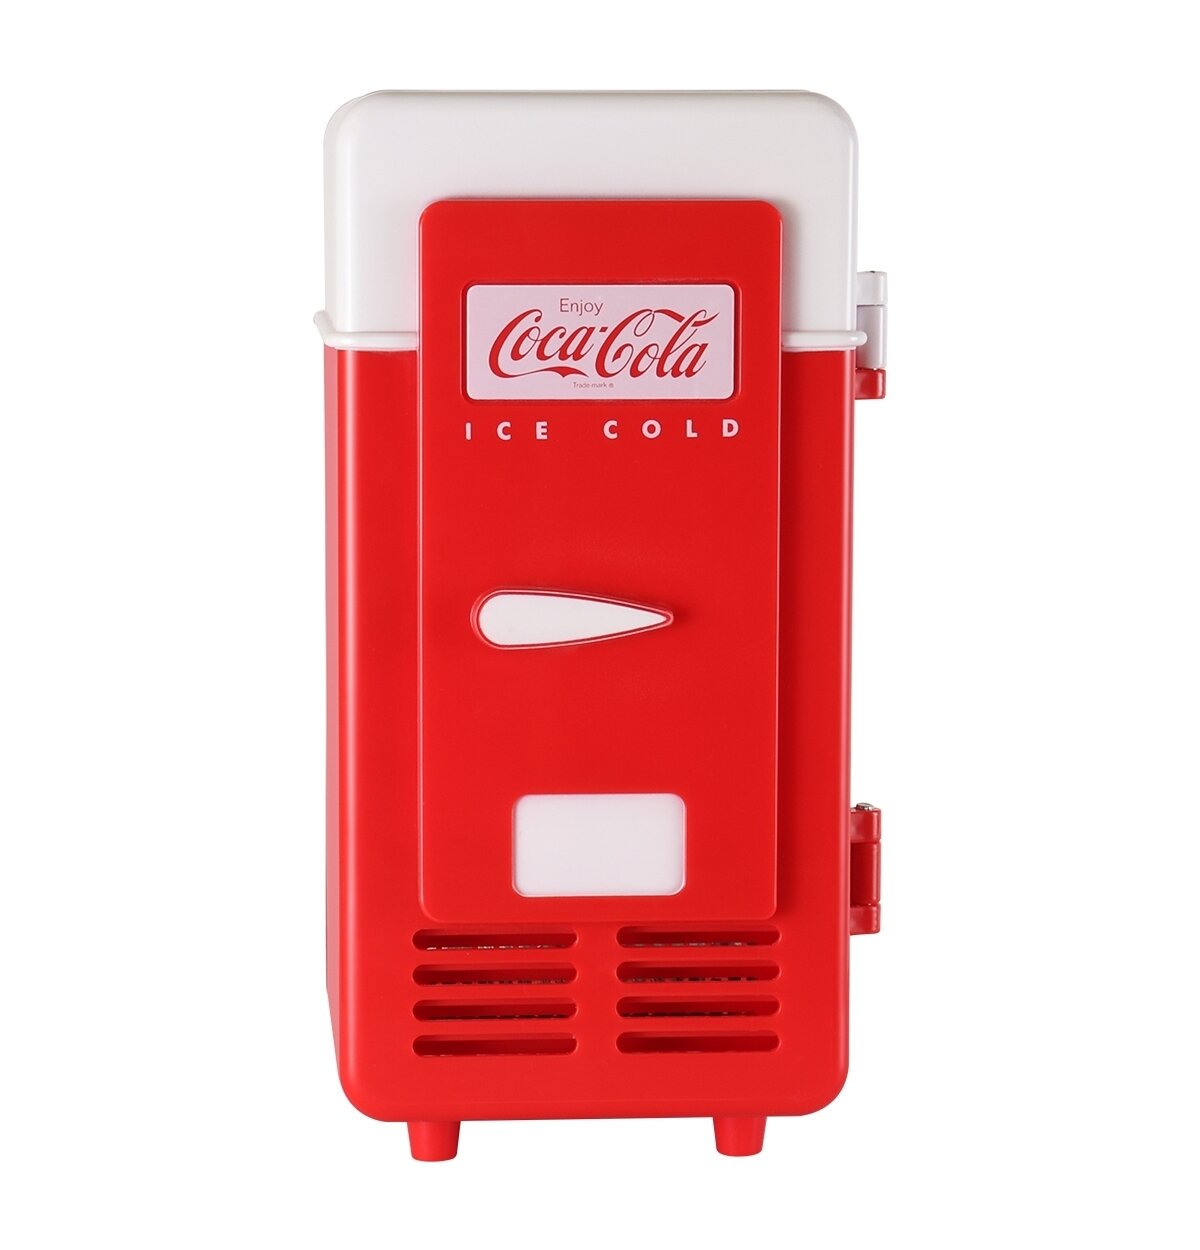 Coca-Cola Single Can Cooler, Red, USB Mini Fridge for Desk, Office, Dorm